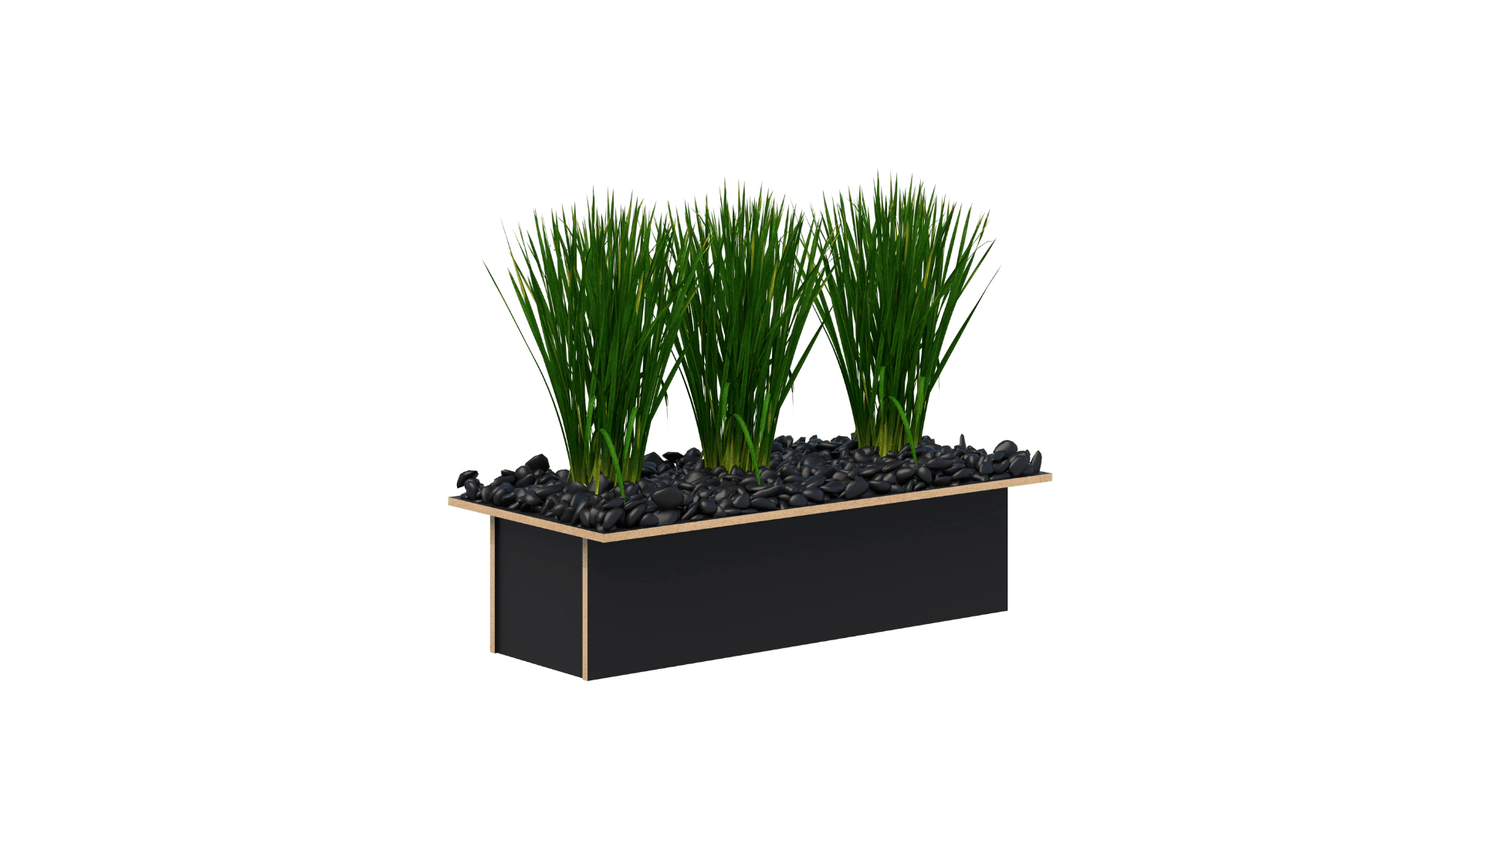 900L / Option 2 Rapid/Mascot/Block - Set of pots and artifical plants